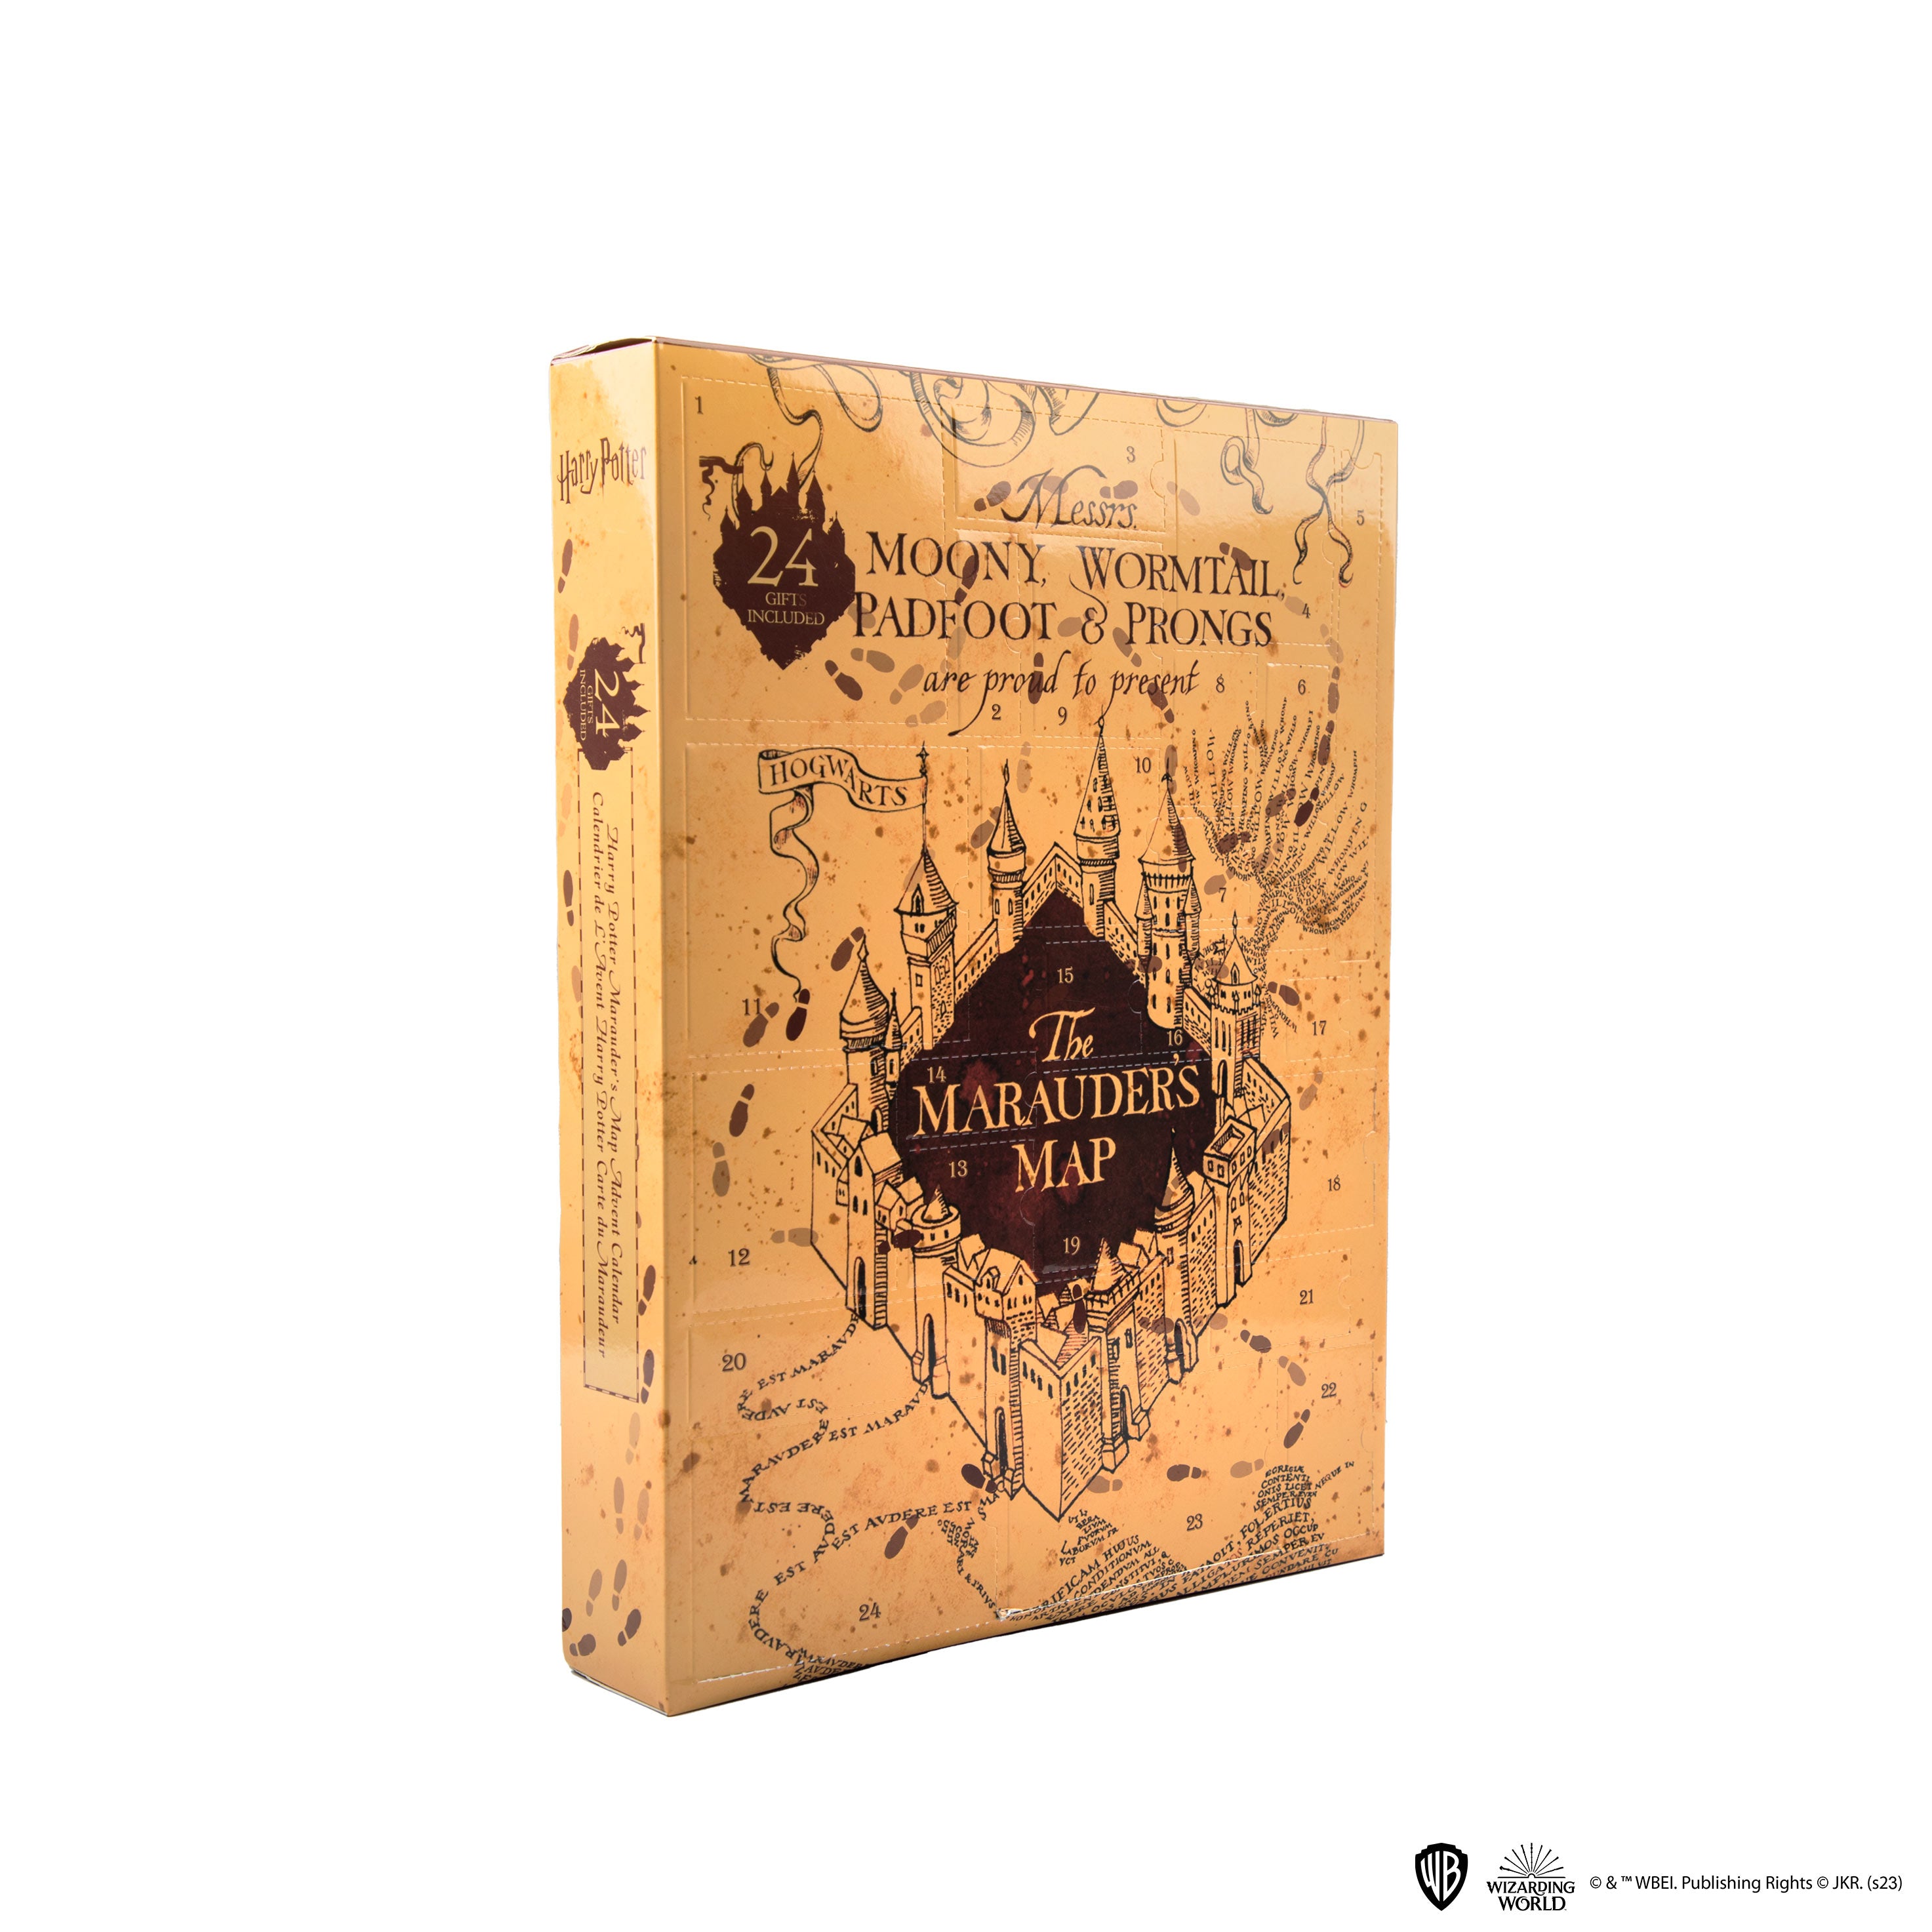 Harry Potter Bookmark - Marauder's Map Charm - Paper House